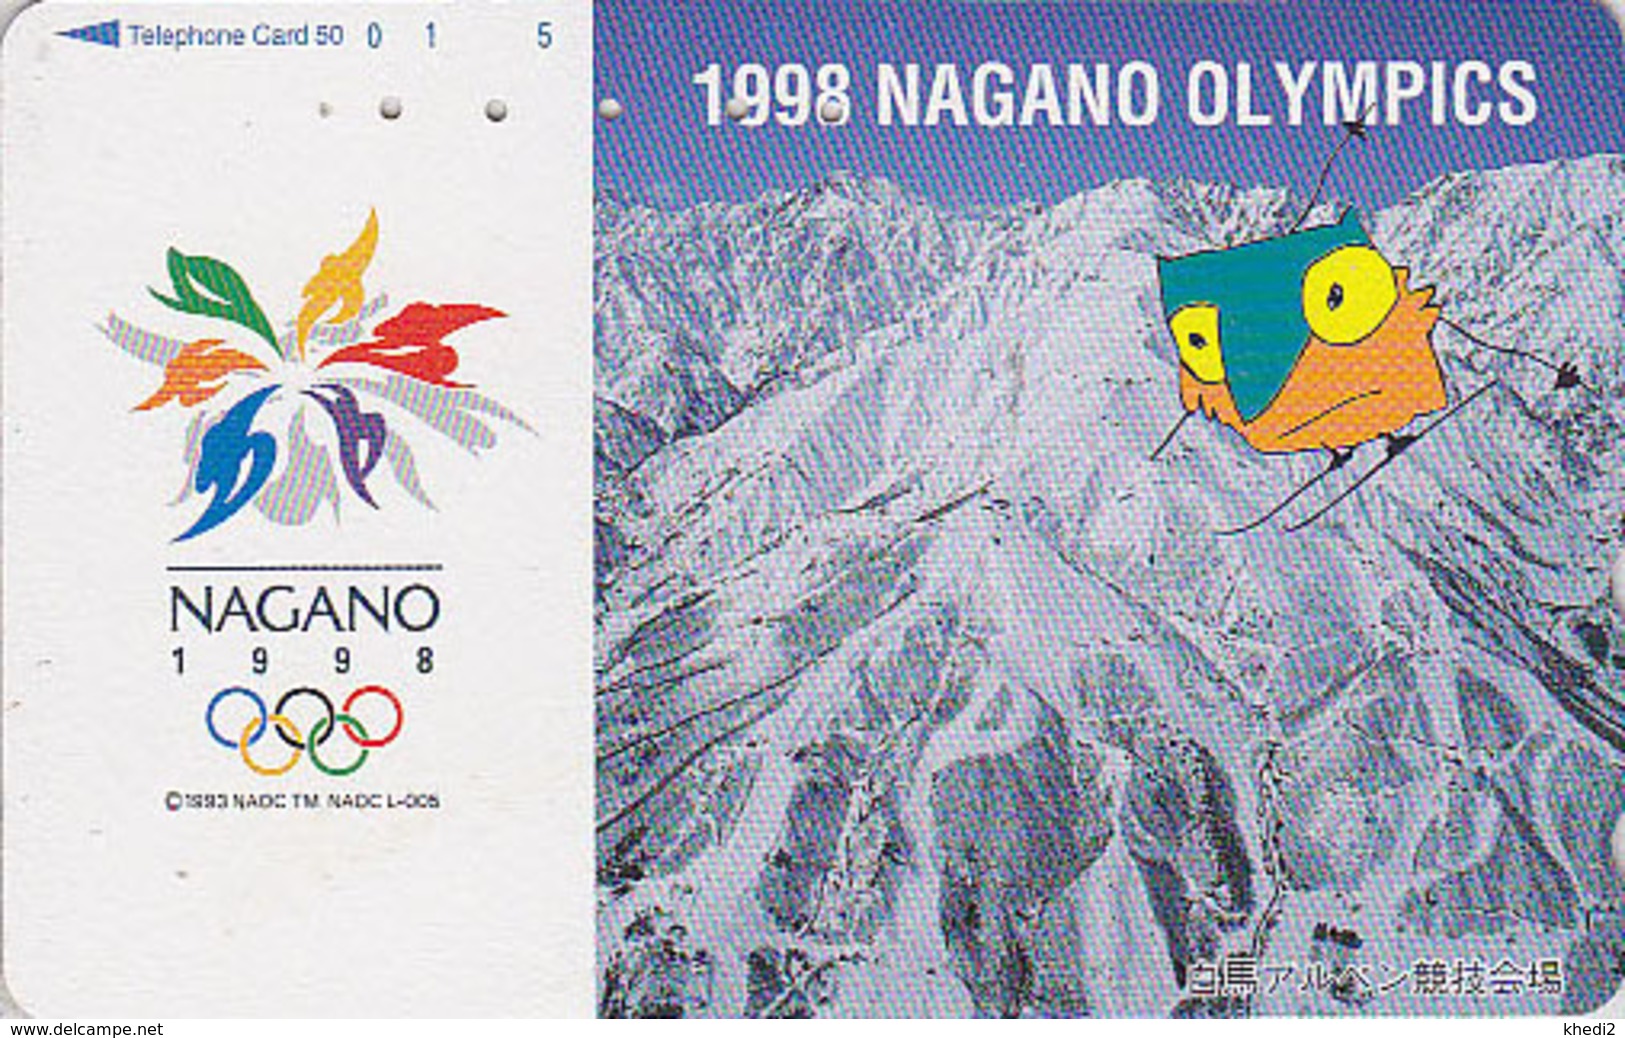 TC JAPON / 271-03106 - ANMAL OISEAU HIBOU Jeux Olympiques NAGANO SKI - OWL Bird OLYMPIC GAMES JAPAN Free PC 3911 - Olympische Spiele